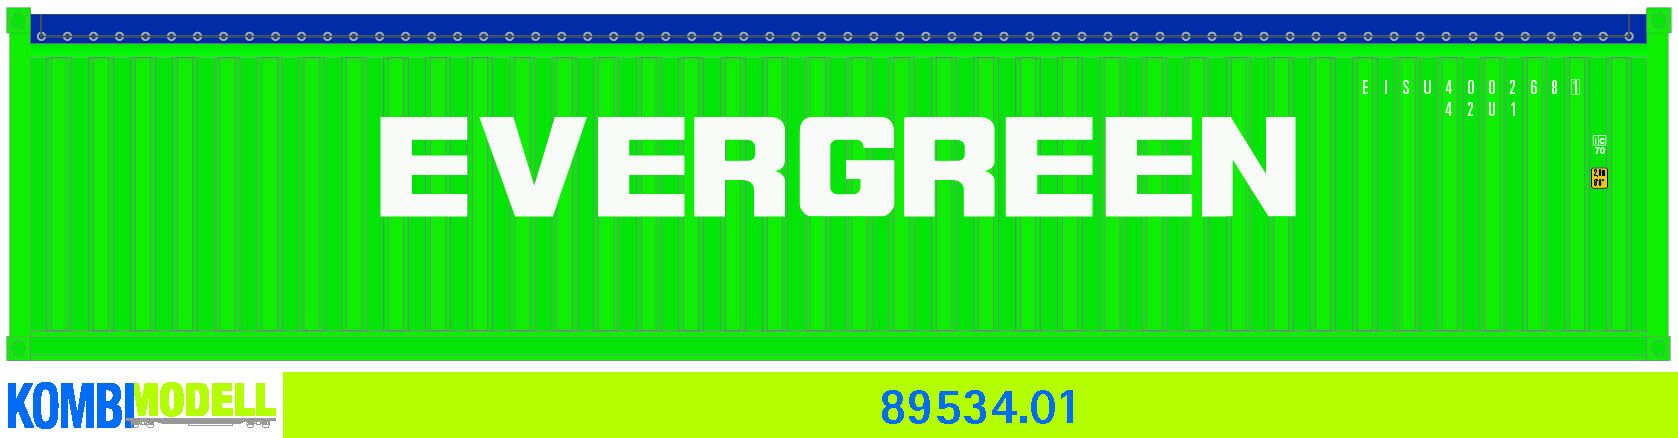 Kombimodell 89534.01 Ct 40`Open Top Evergreen   SoSe 